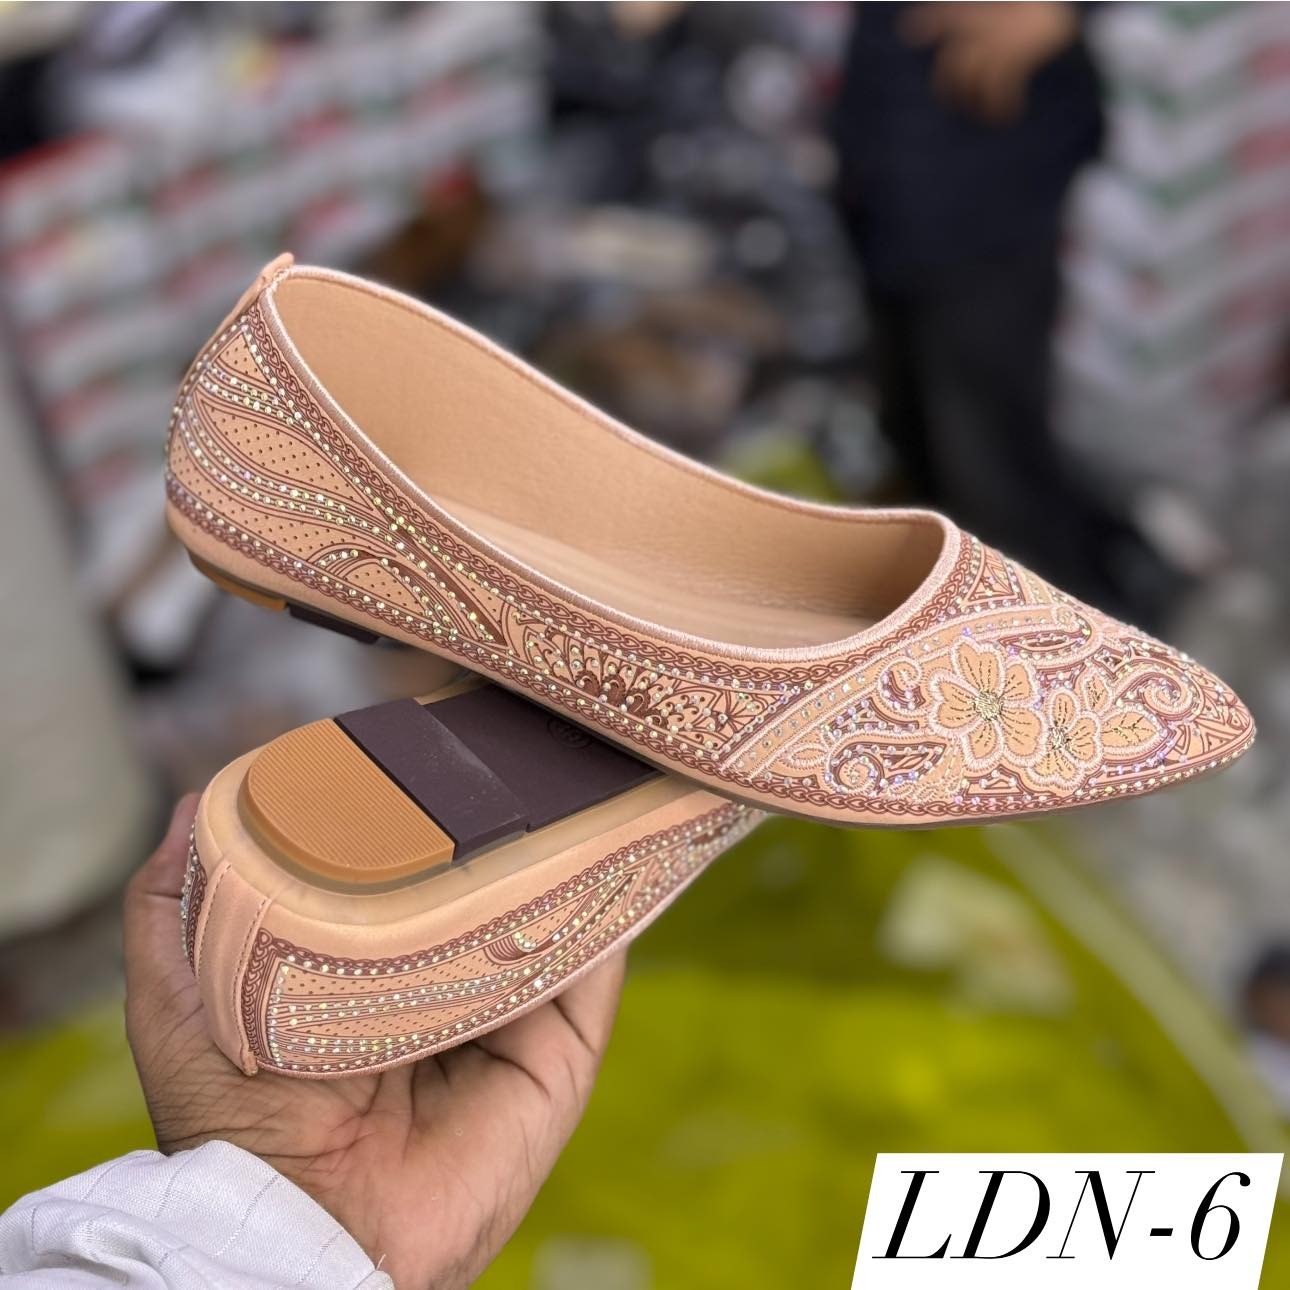 Exclusive ladies shoe (LDN 6)